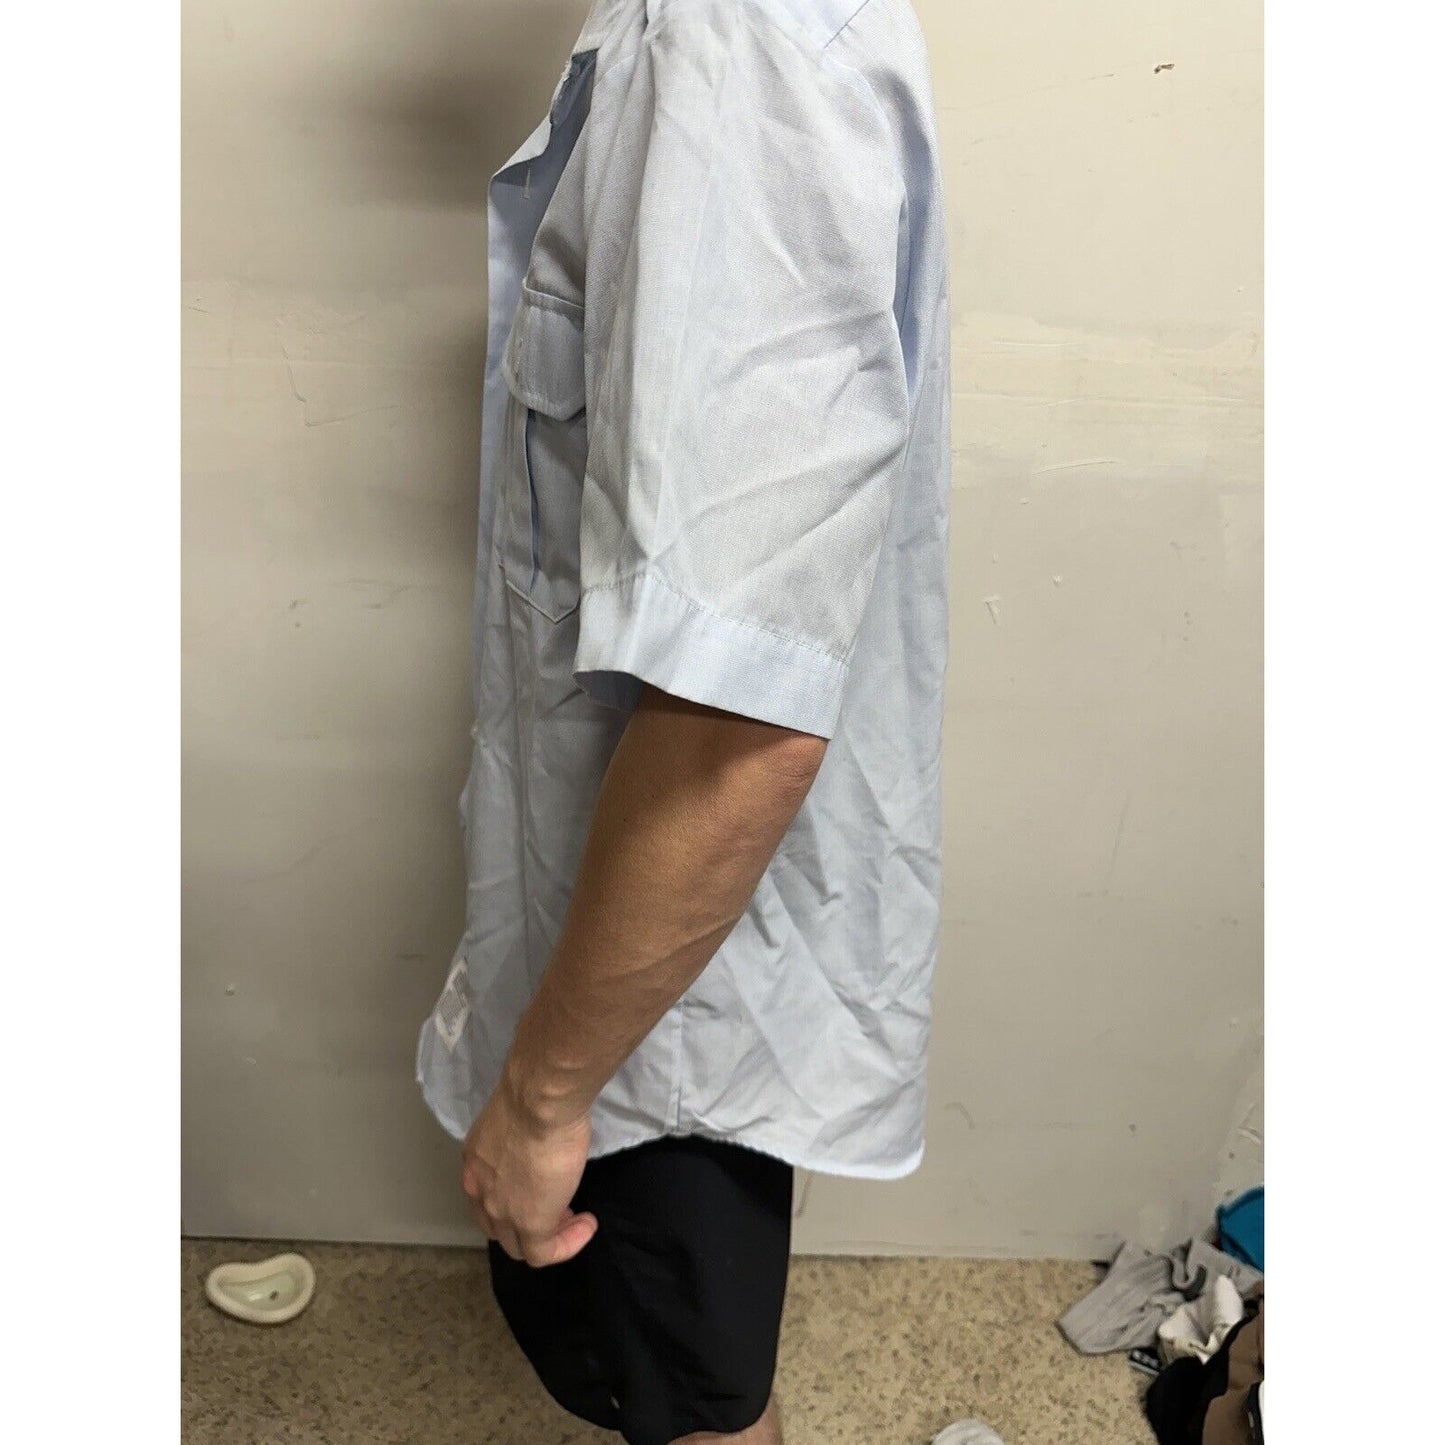 Men’s Defense Logistics Agency Short Sleeve Blues Uniform Shirt 17